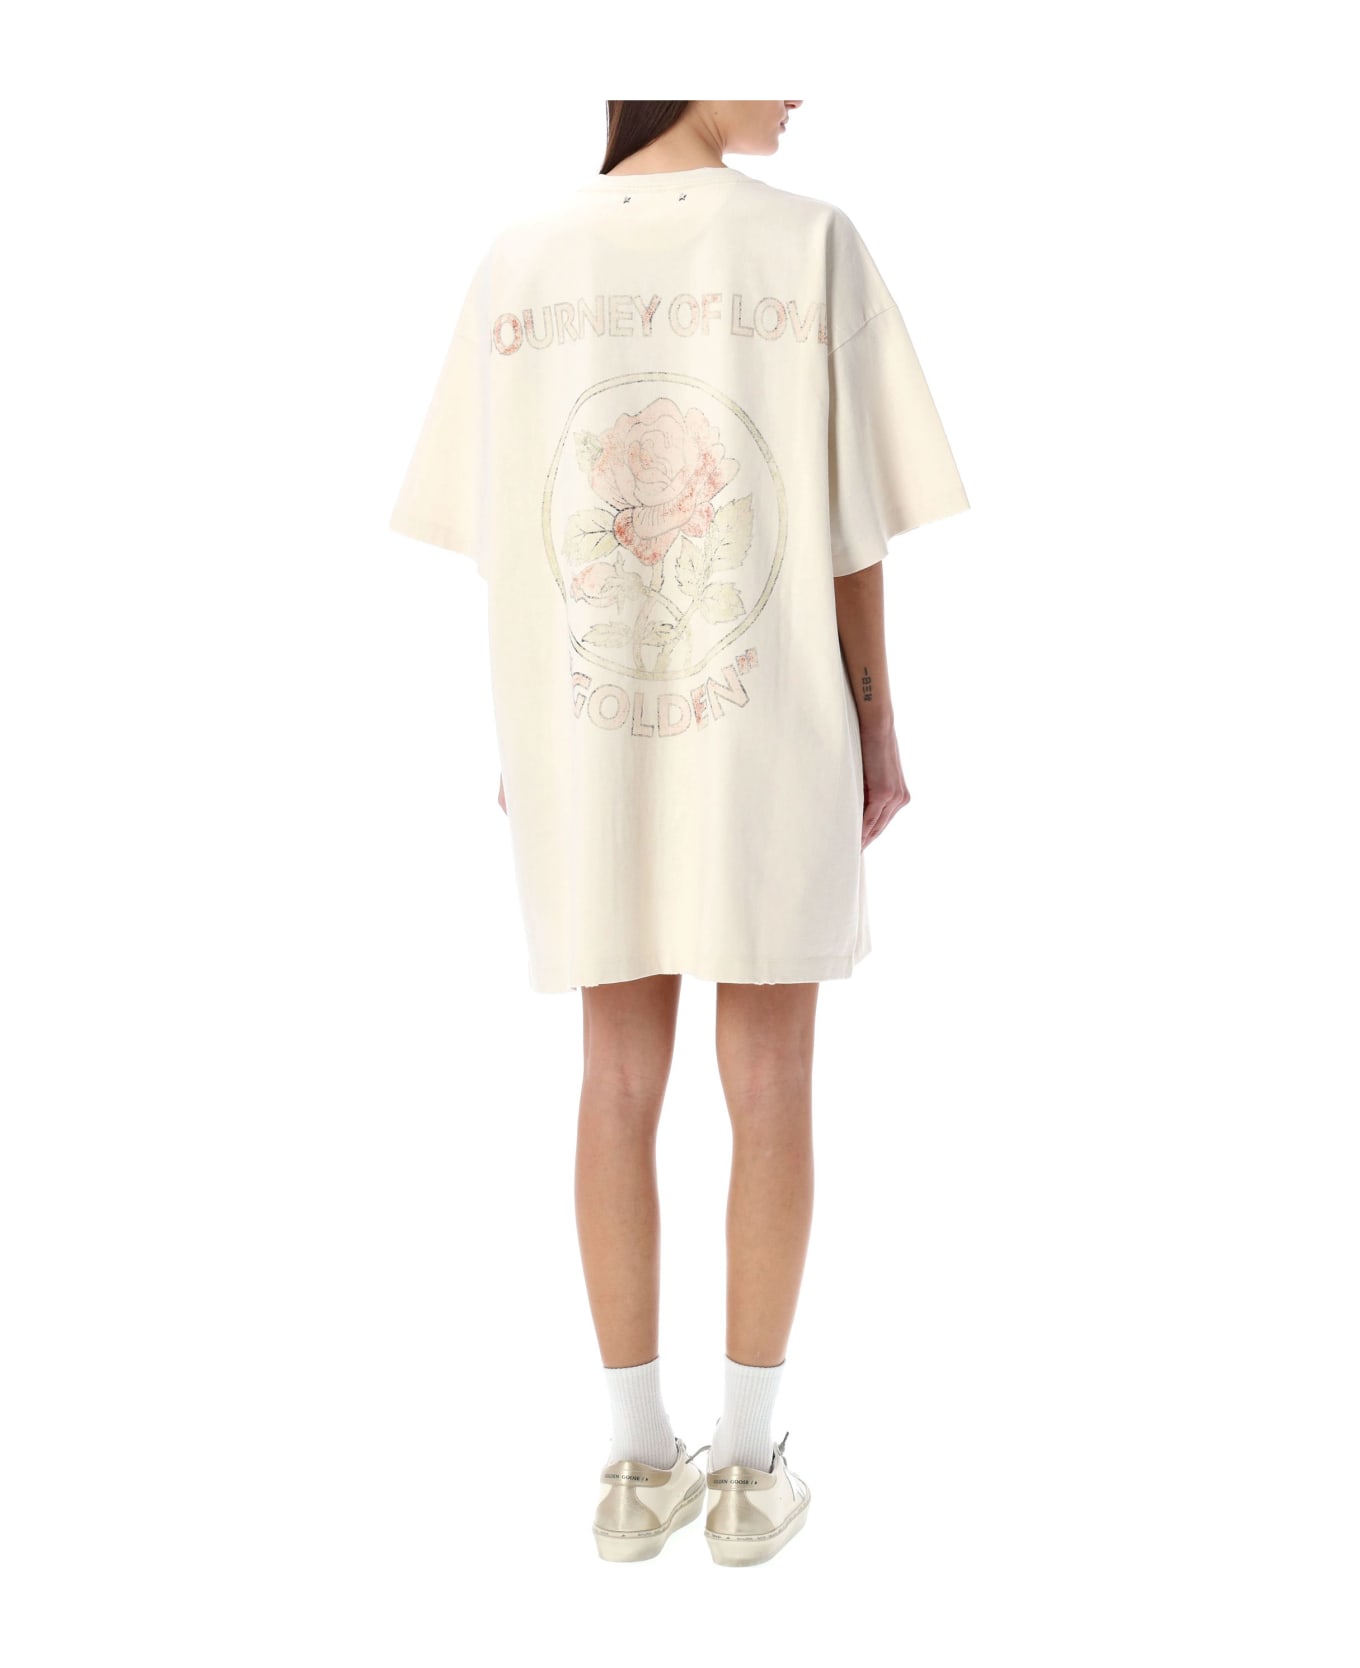 Golden Goose Printed T-shirt Dress - HERITAGE WHITE